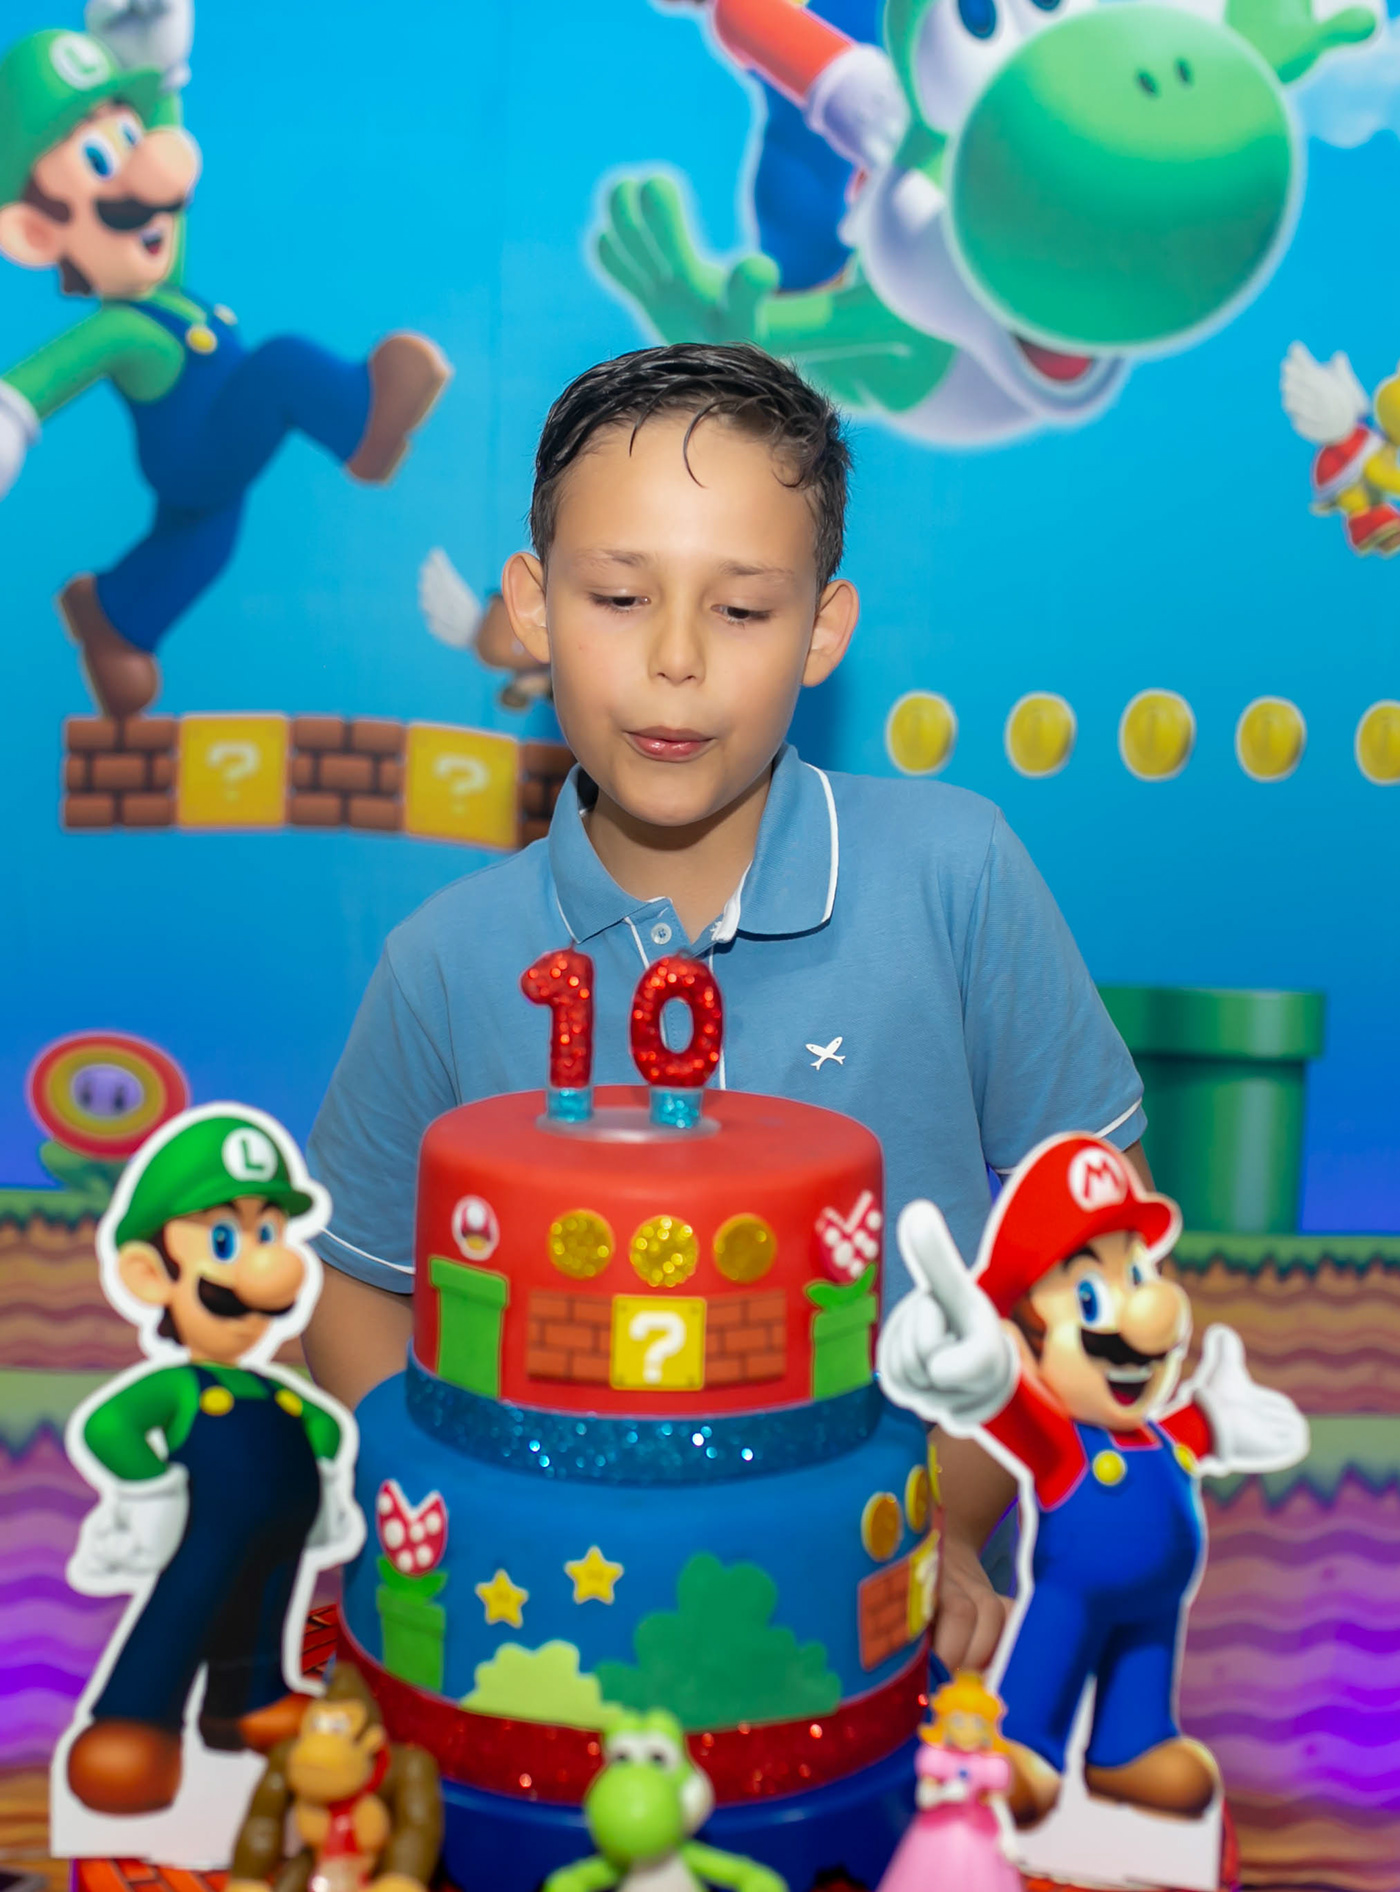 Image may contain: birthday cake, cartoon and boy